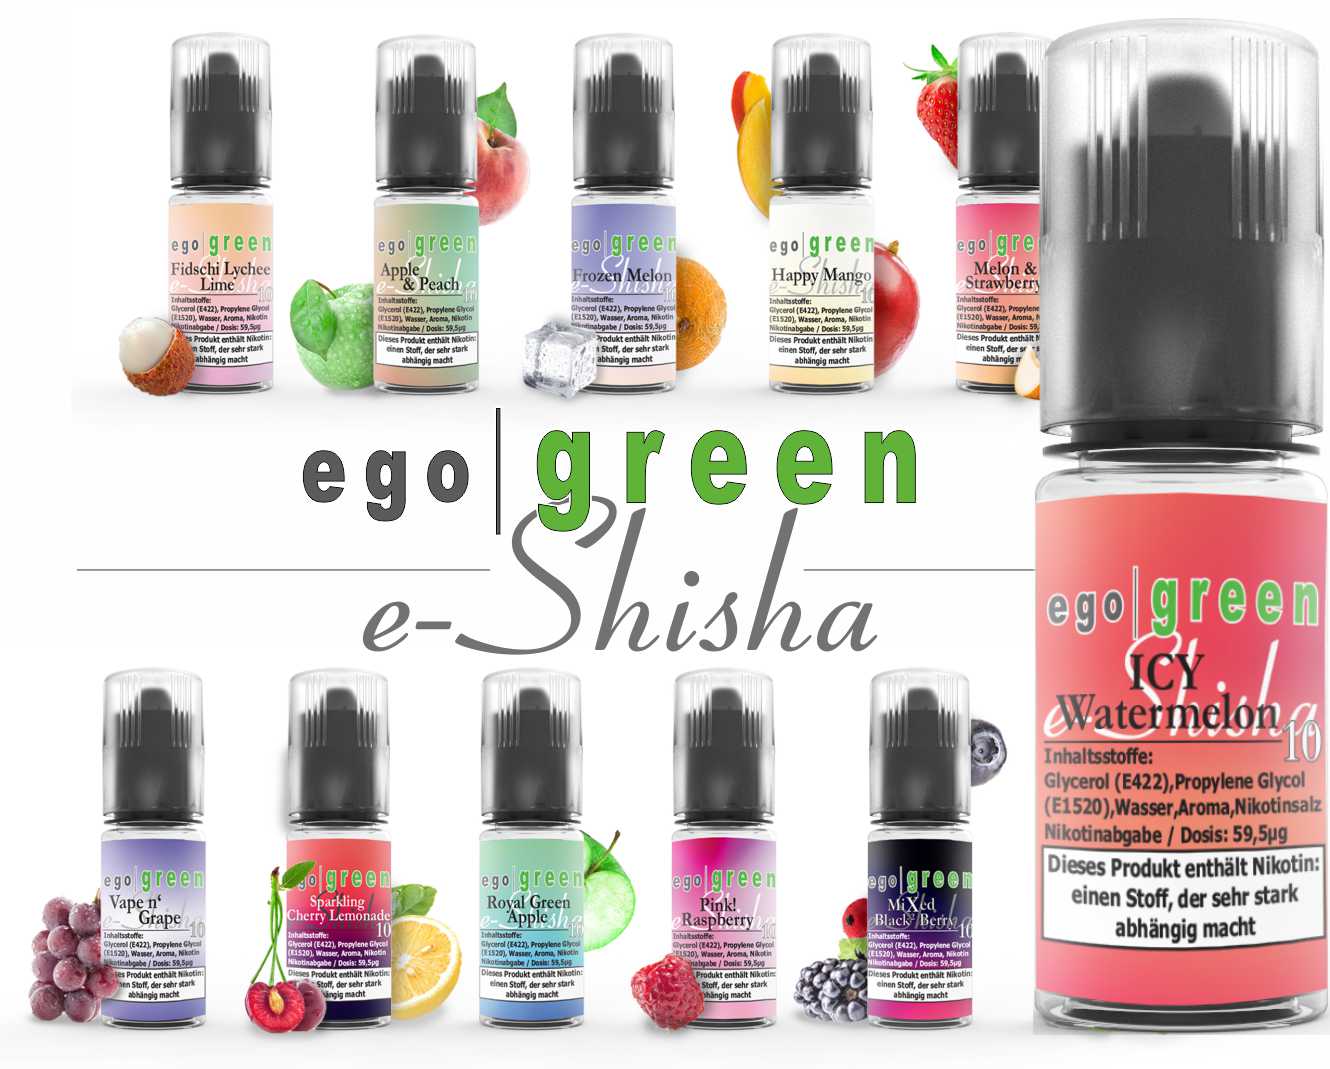 egogreen ICY Watermelon Nikotinsalz e-Shisha Liquid kaufen